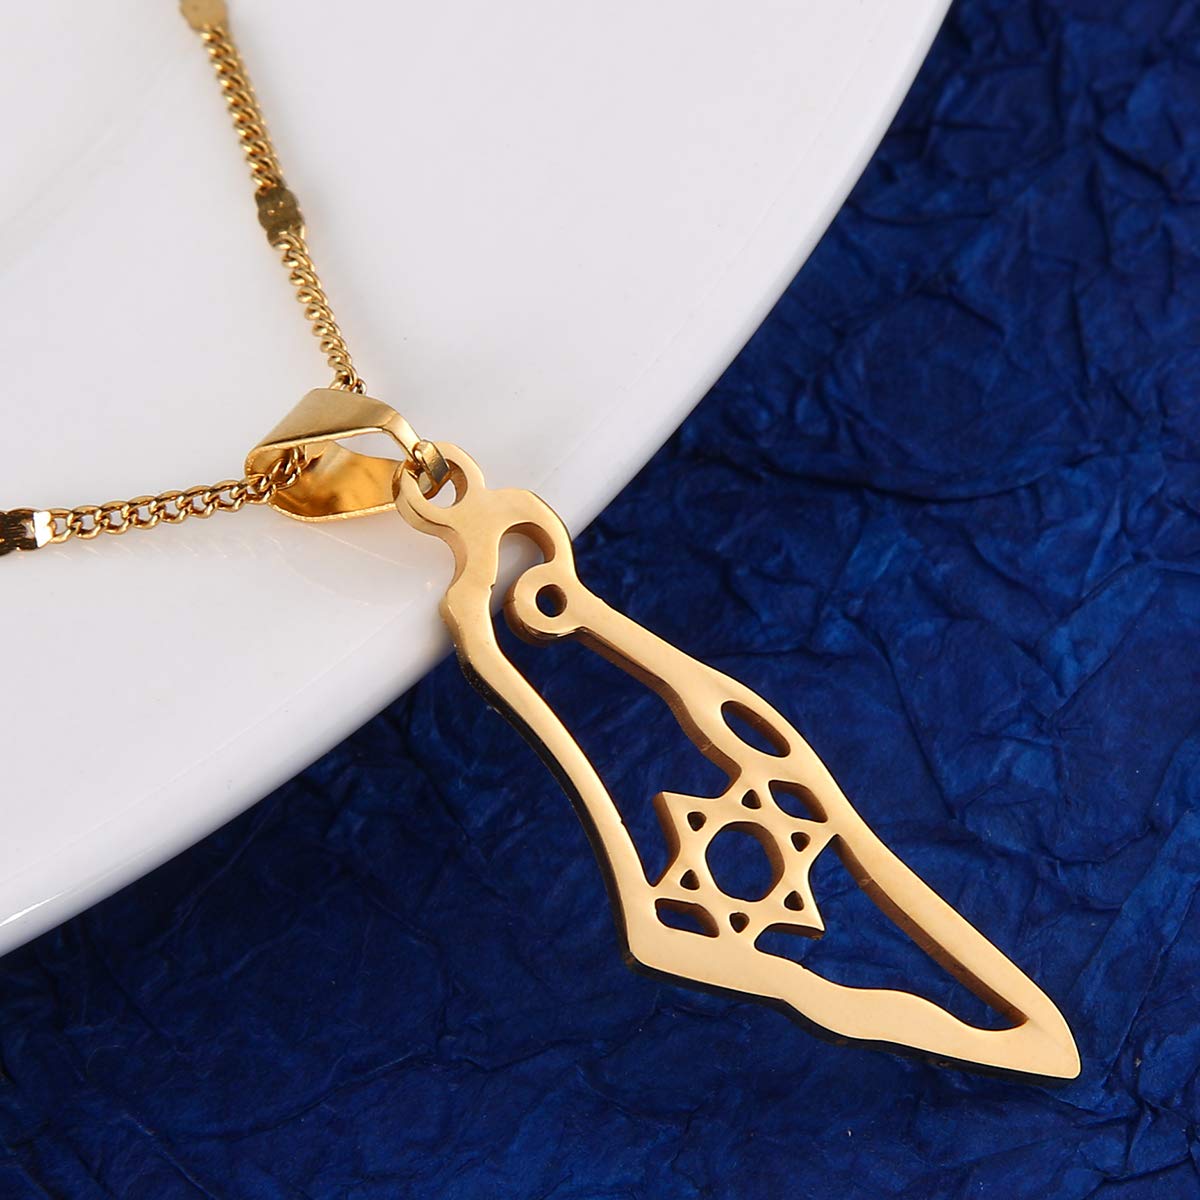 Stainless Steel Israel Map Pendant Necklace Hexagram Magen David Jewelry Star of David Jewish Jewelry